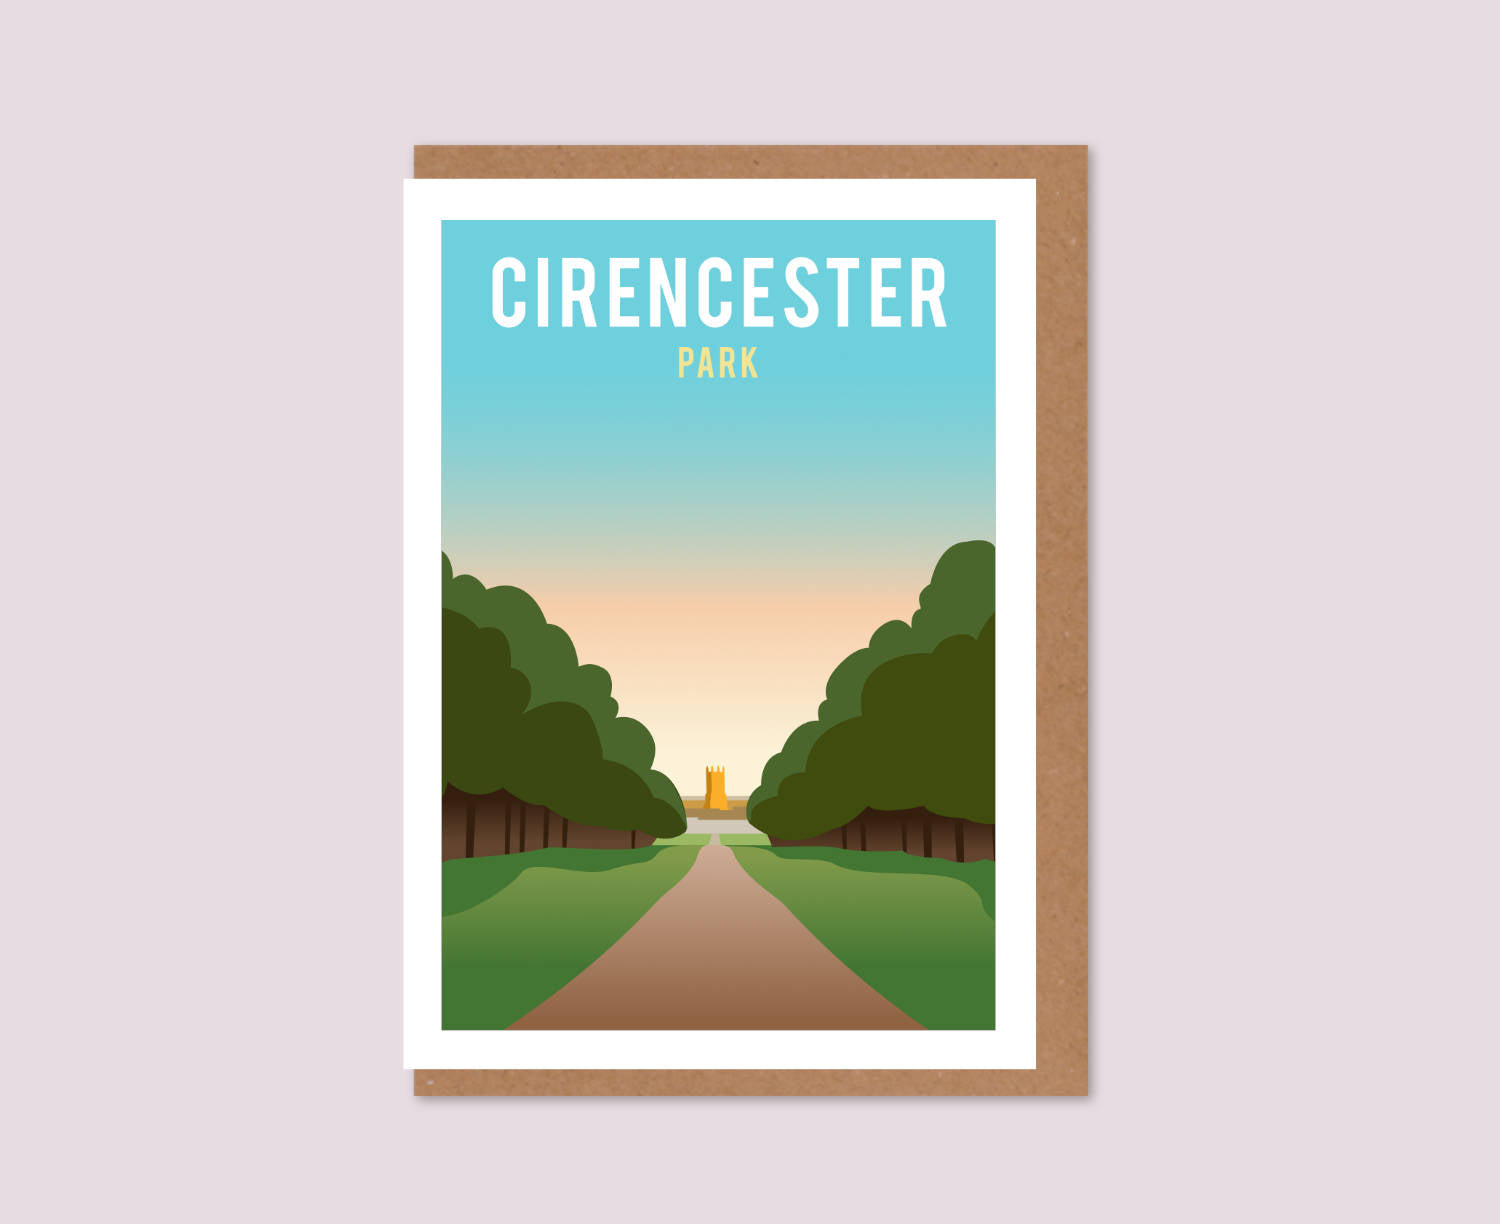 Cirencester Park Greeting Card Design